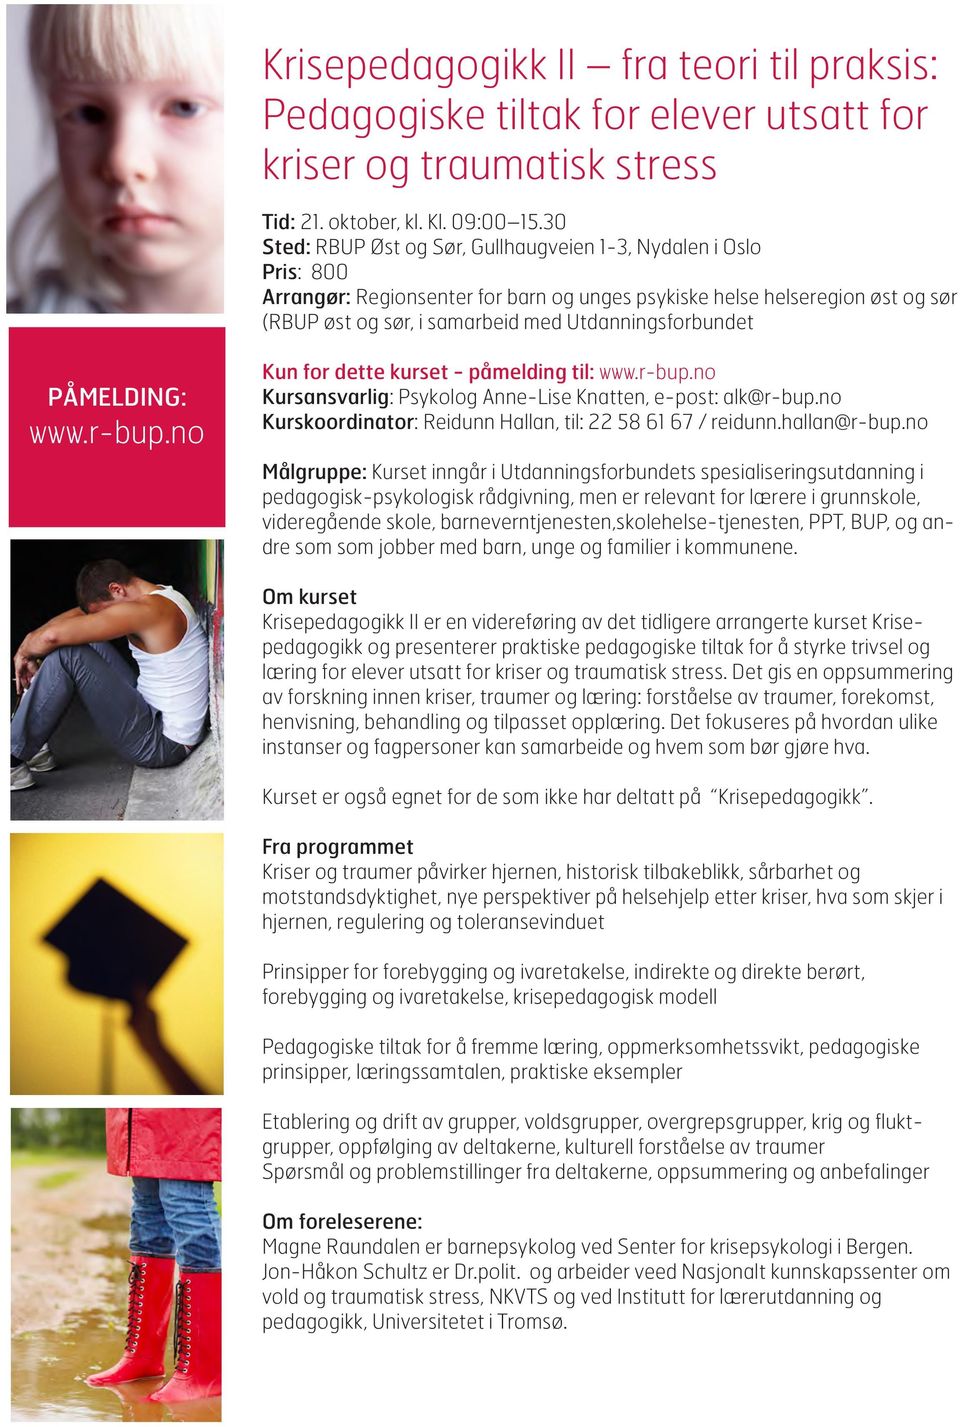 Utdanningsforbundet PÅMELDING: www.r-bup.no Kun for dette kurset - påmelding til: www.r-bup.no Kursansvarlig: Psykolog Anne-Lise Knatten, e-post: alk@r-bup.